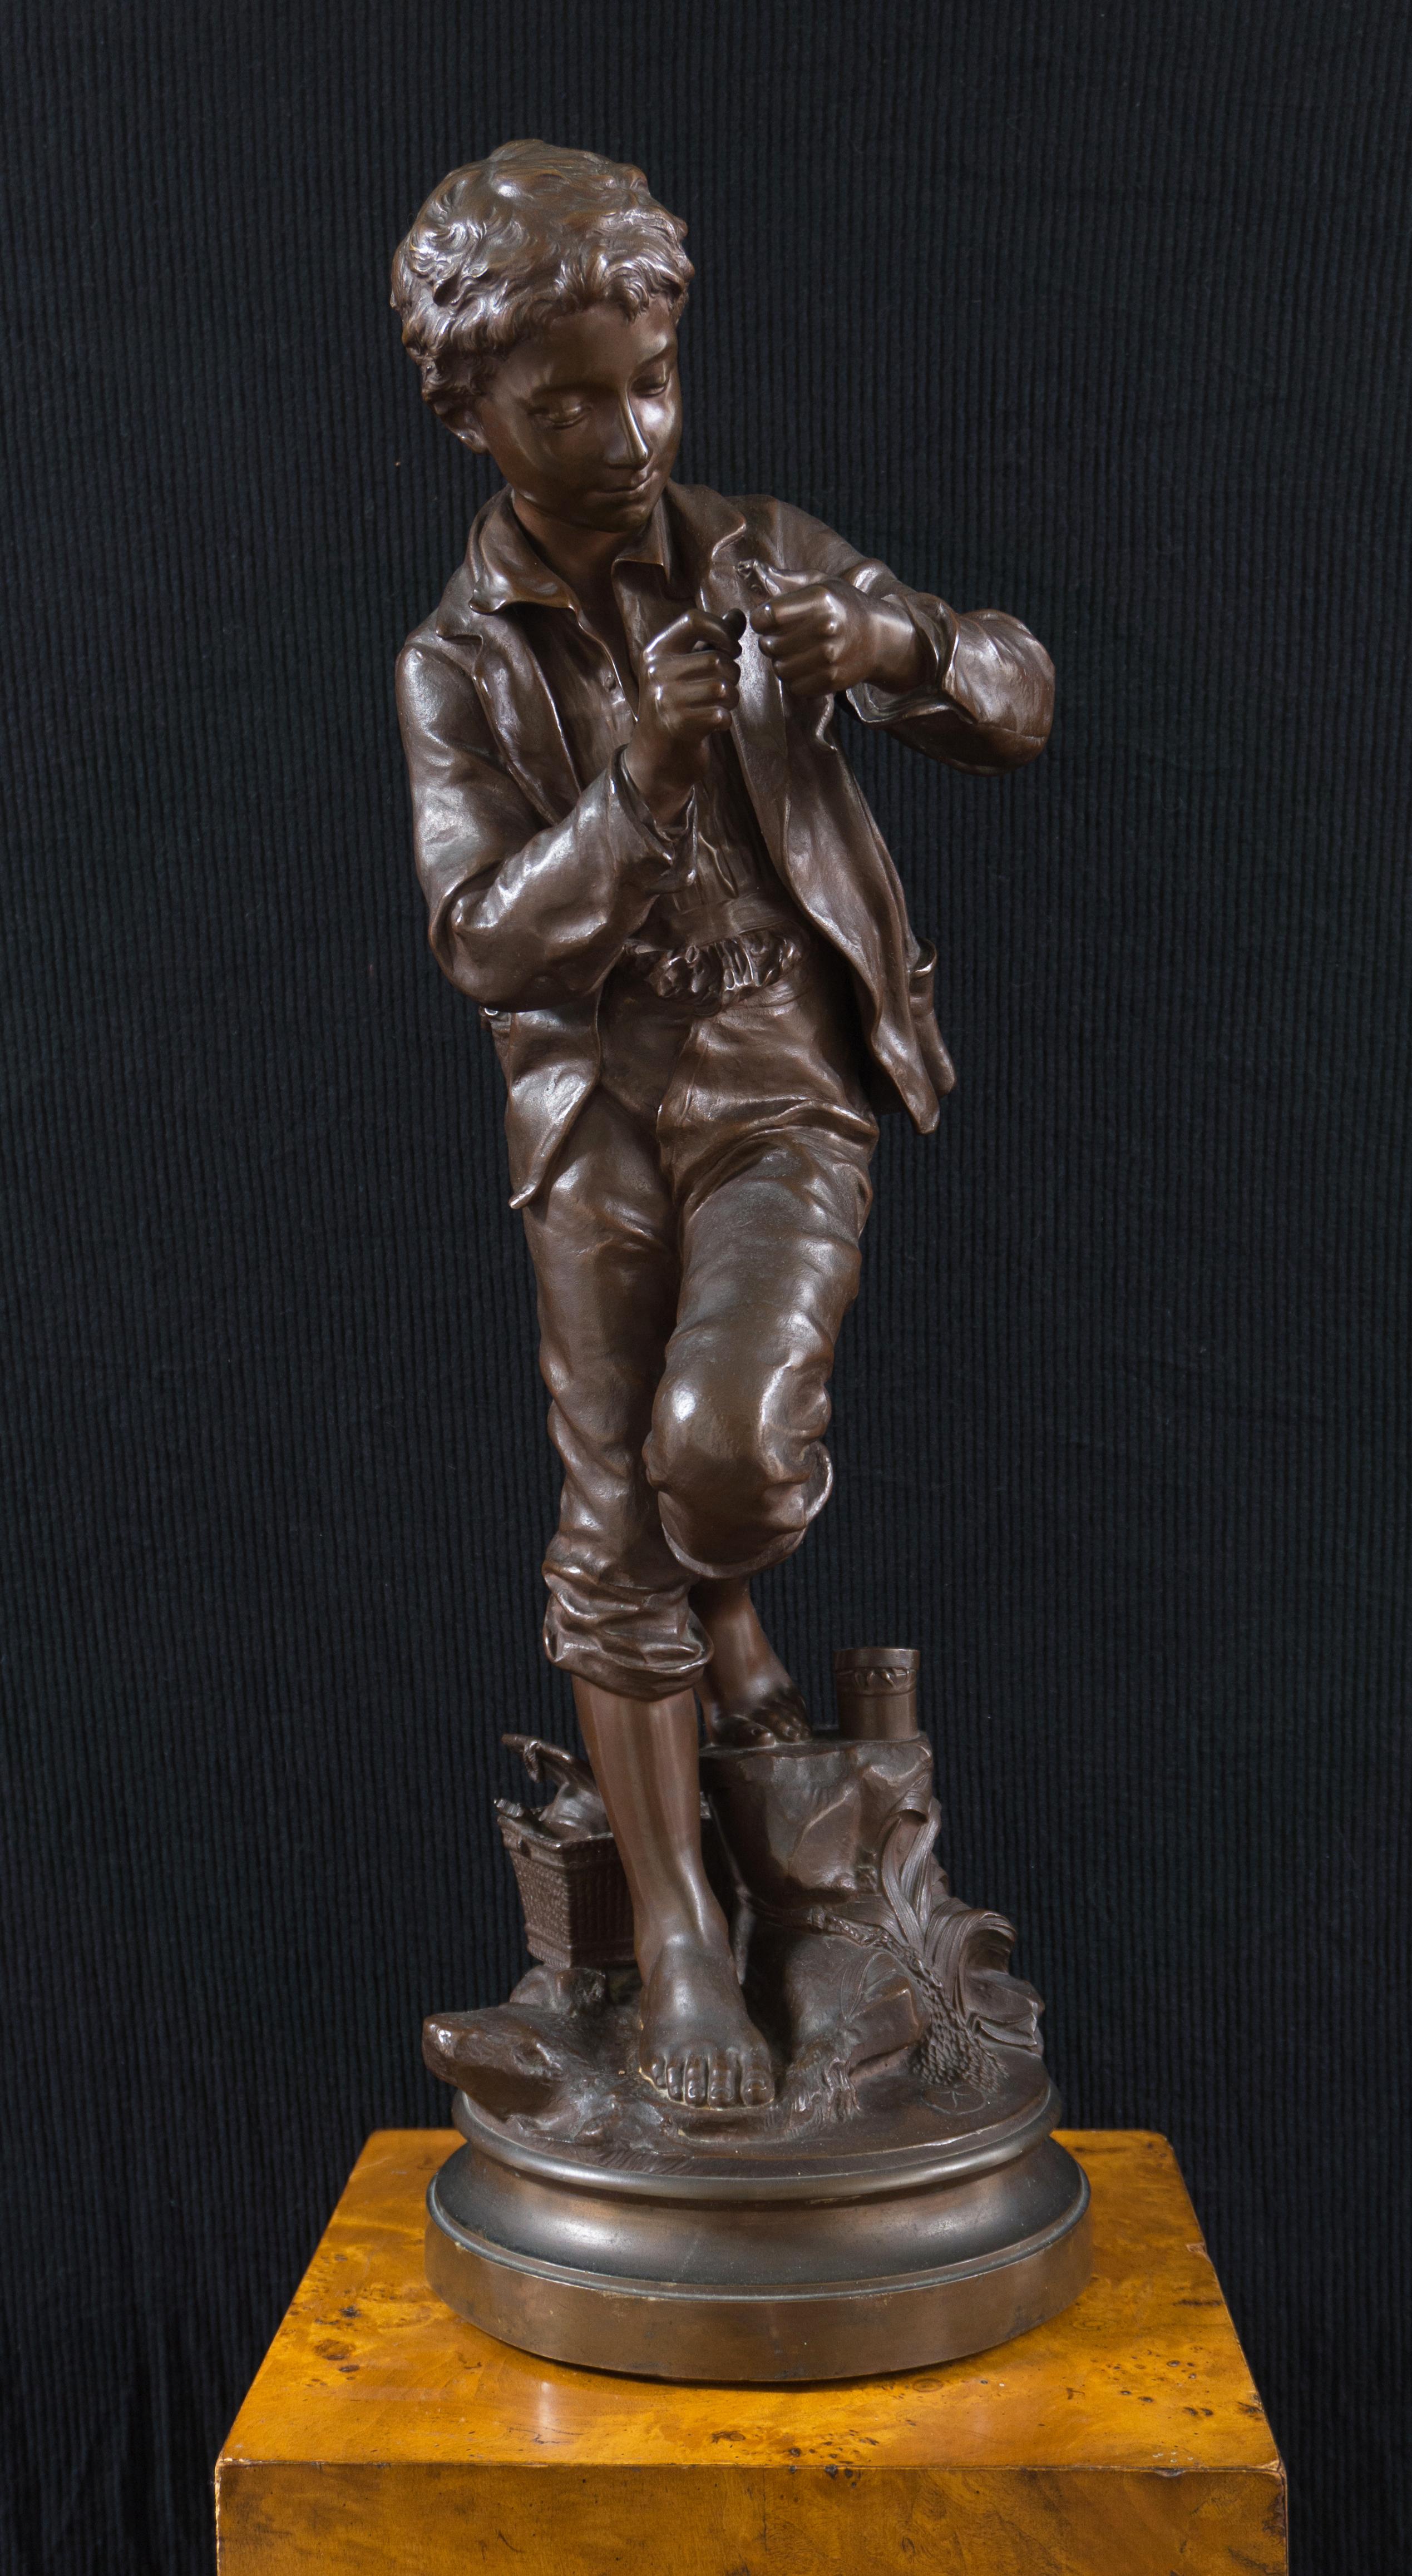 Comte Eugene D'Astanieres Figurative Sculpture - 'The Fisher Boy', Large Bronze, Medal of Honor, Paris Universal Exposition, 1900